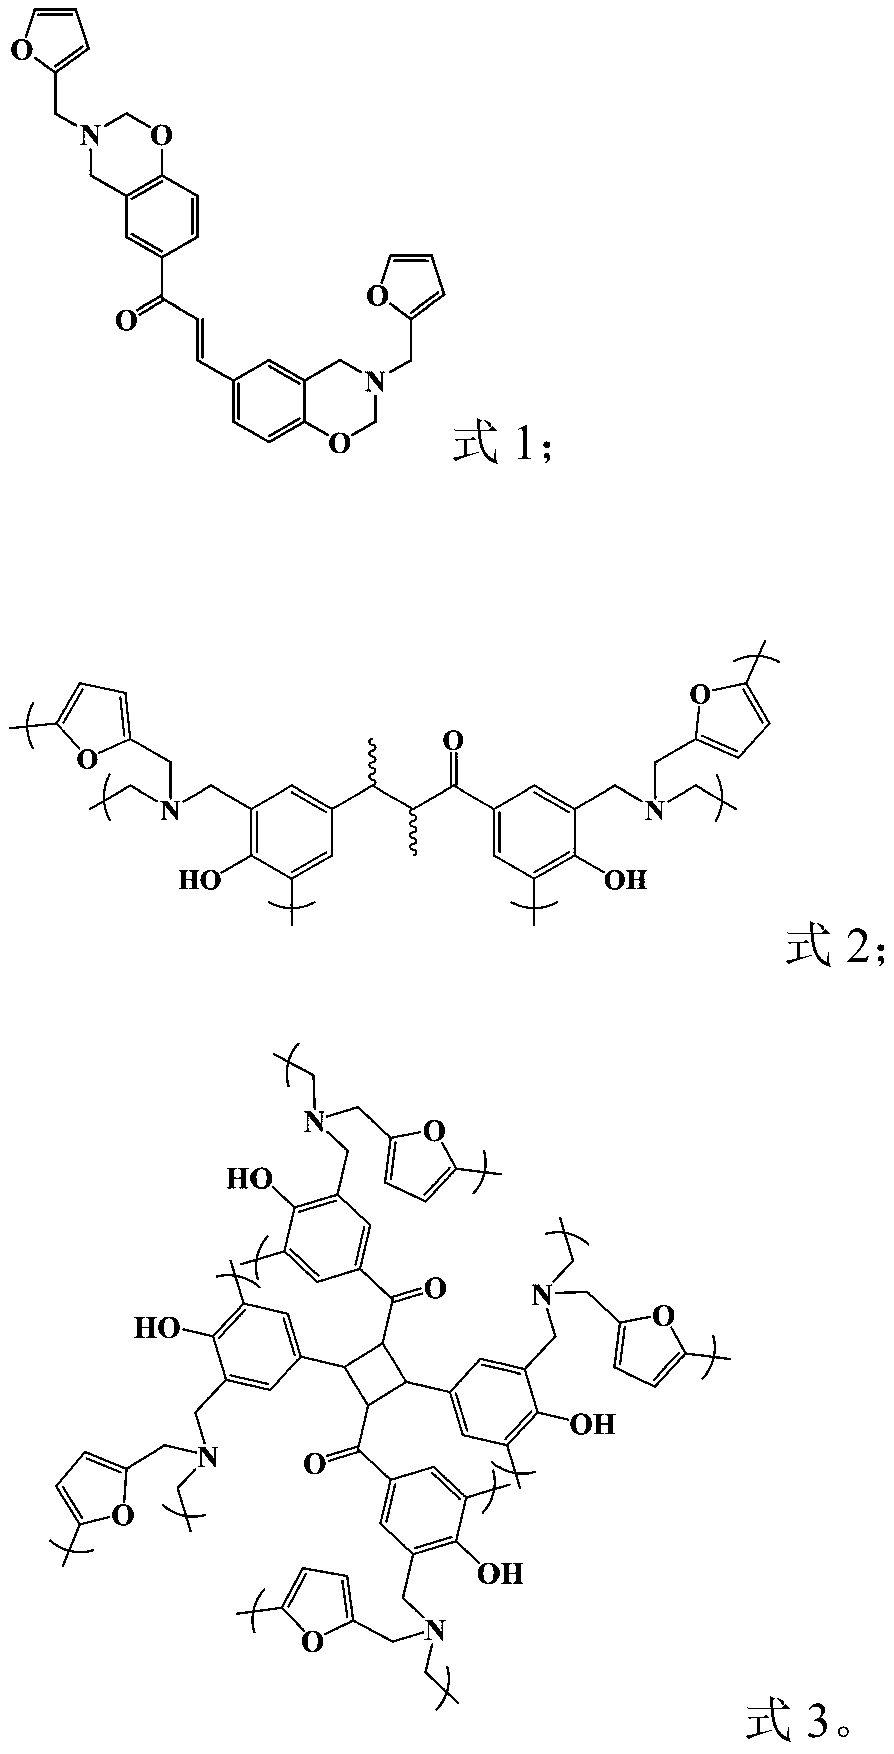 Benzoxazine full-bio-based resin and preparation method thereof